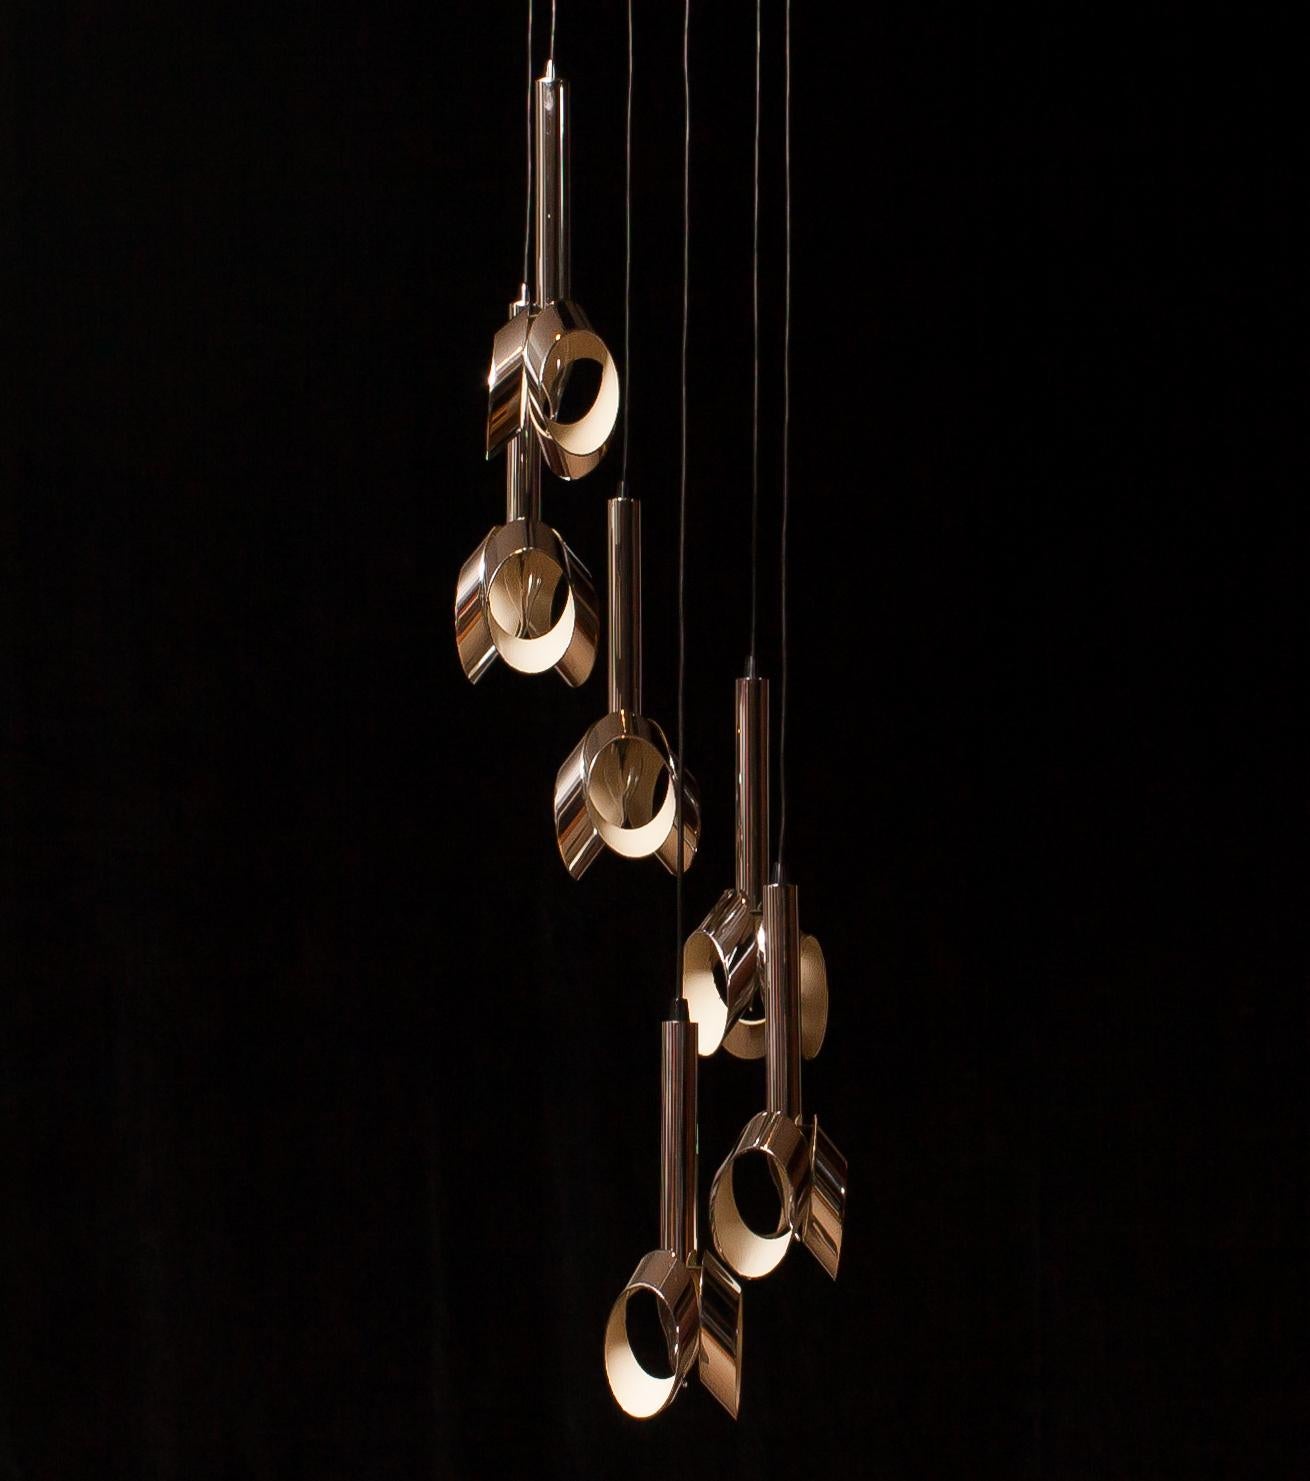 1960s, Chromed Metal Ceiling Lamp or Chandelier by RAAK, Amsterdam (Moderne der Mitte des Jahrhunderts)